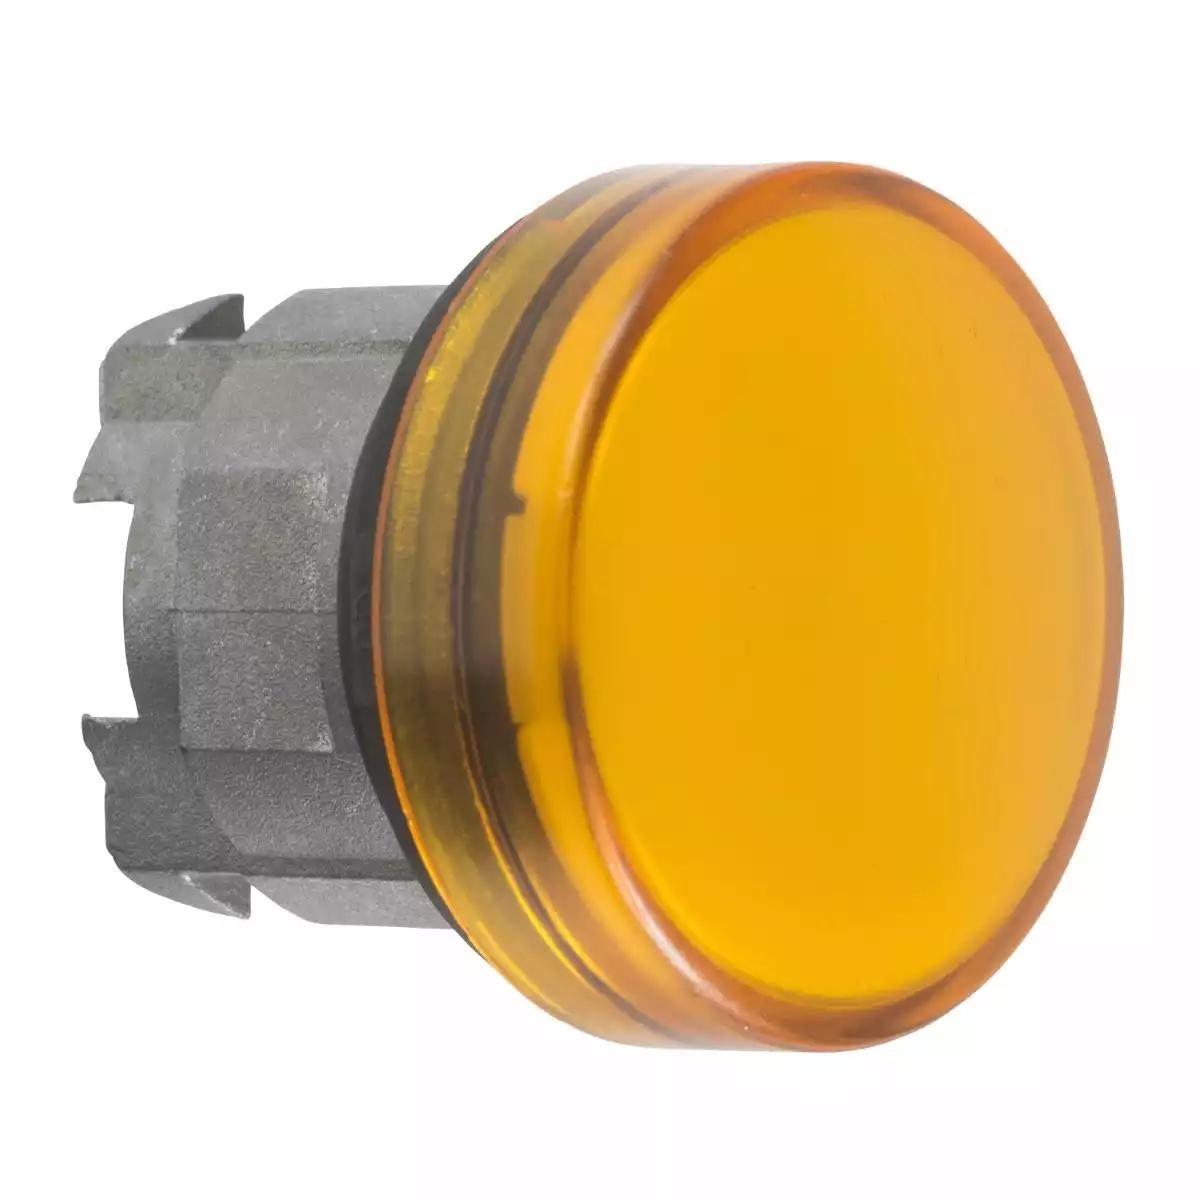 Pilot light head, Harmony XB4, metal, orange, 22mm, plain lens for BA9s bulb